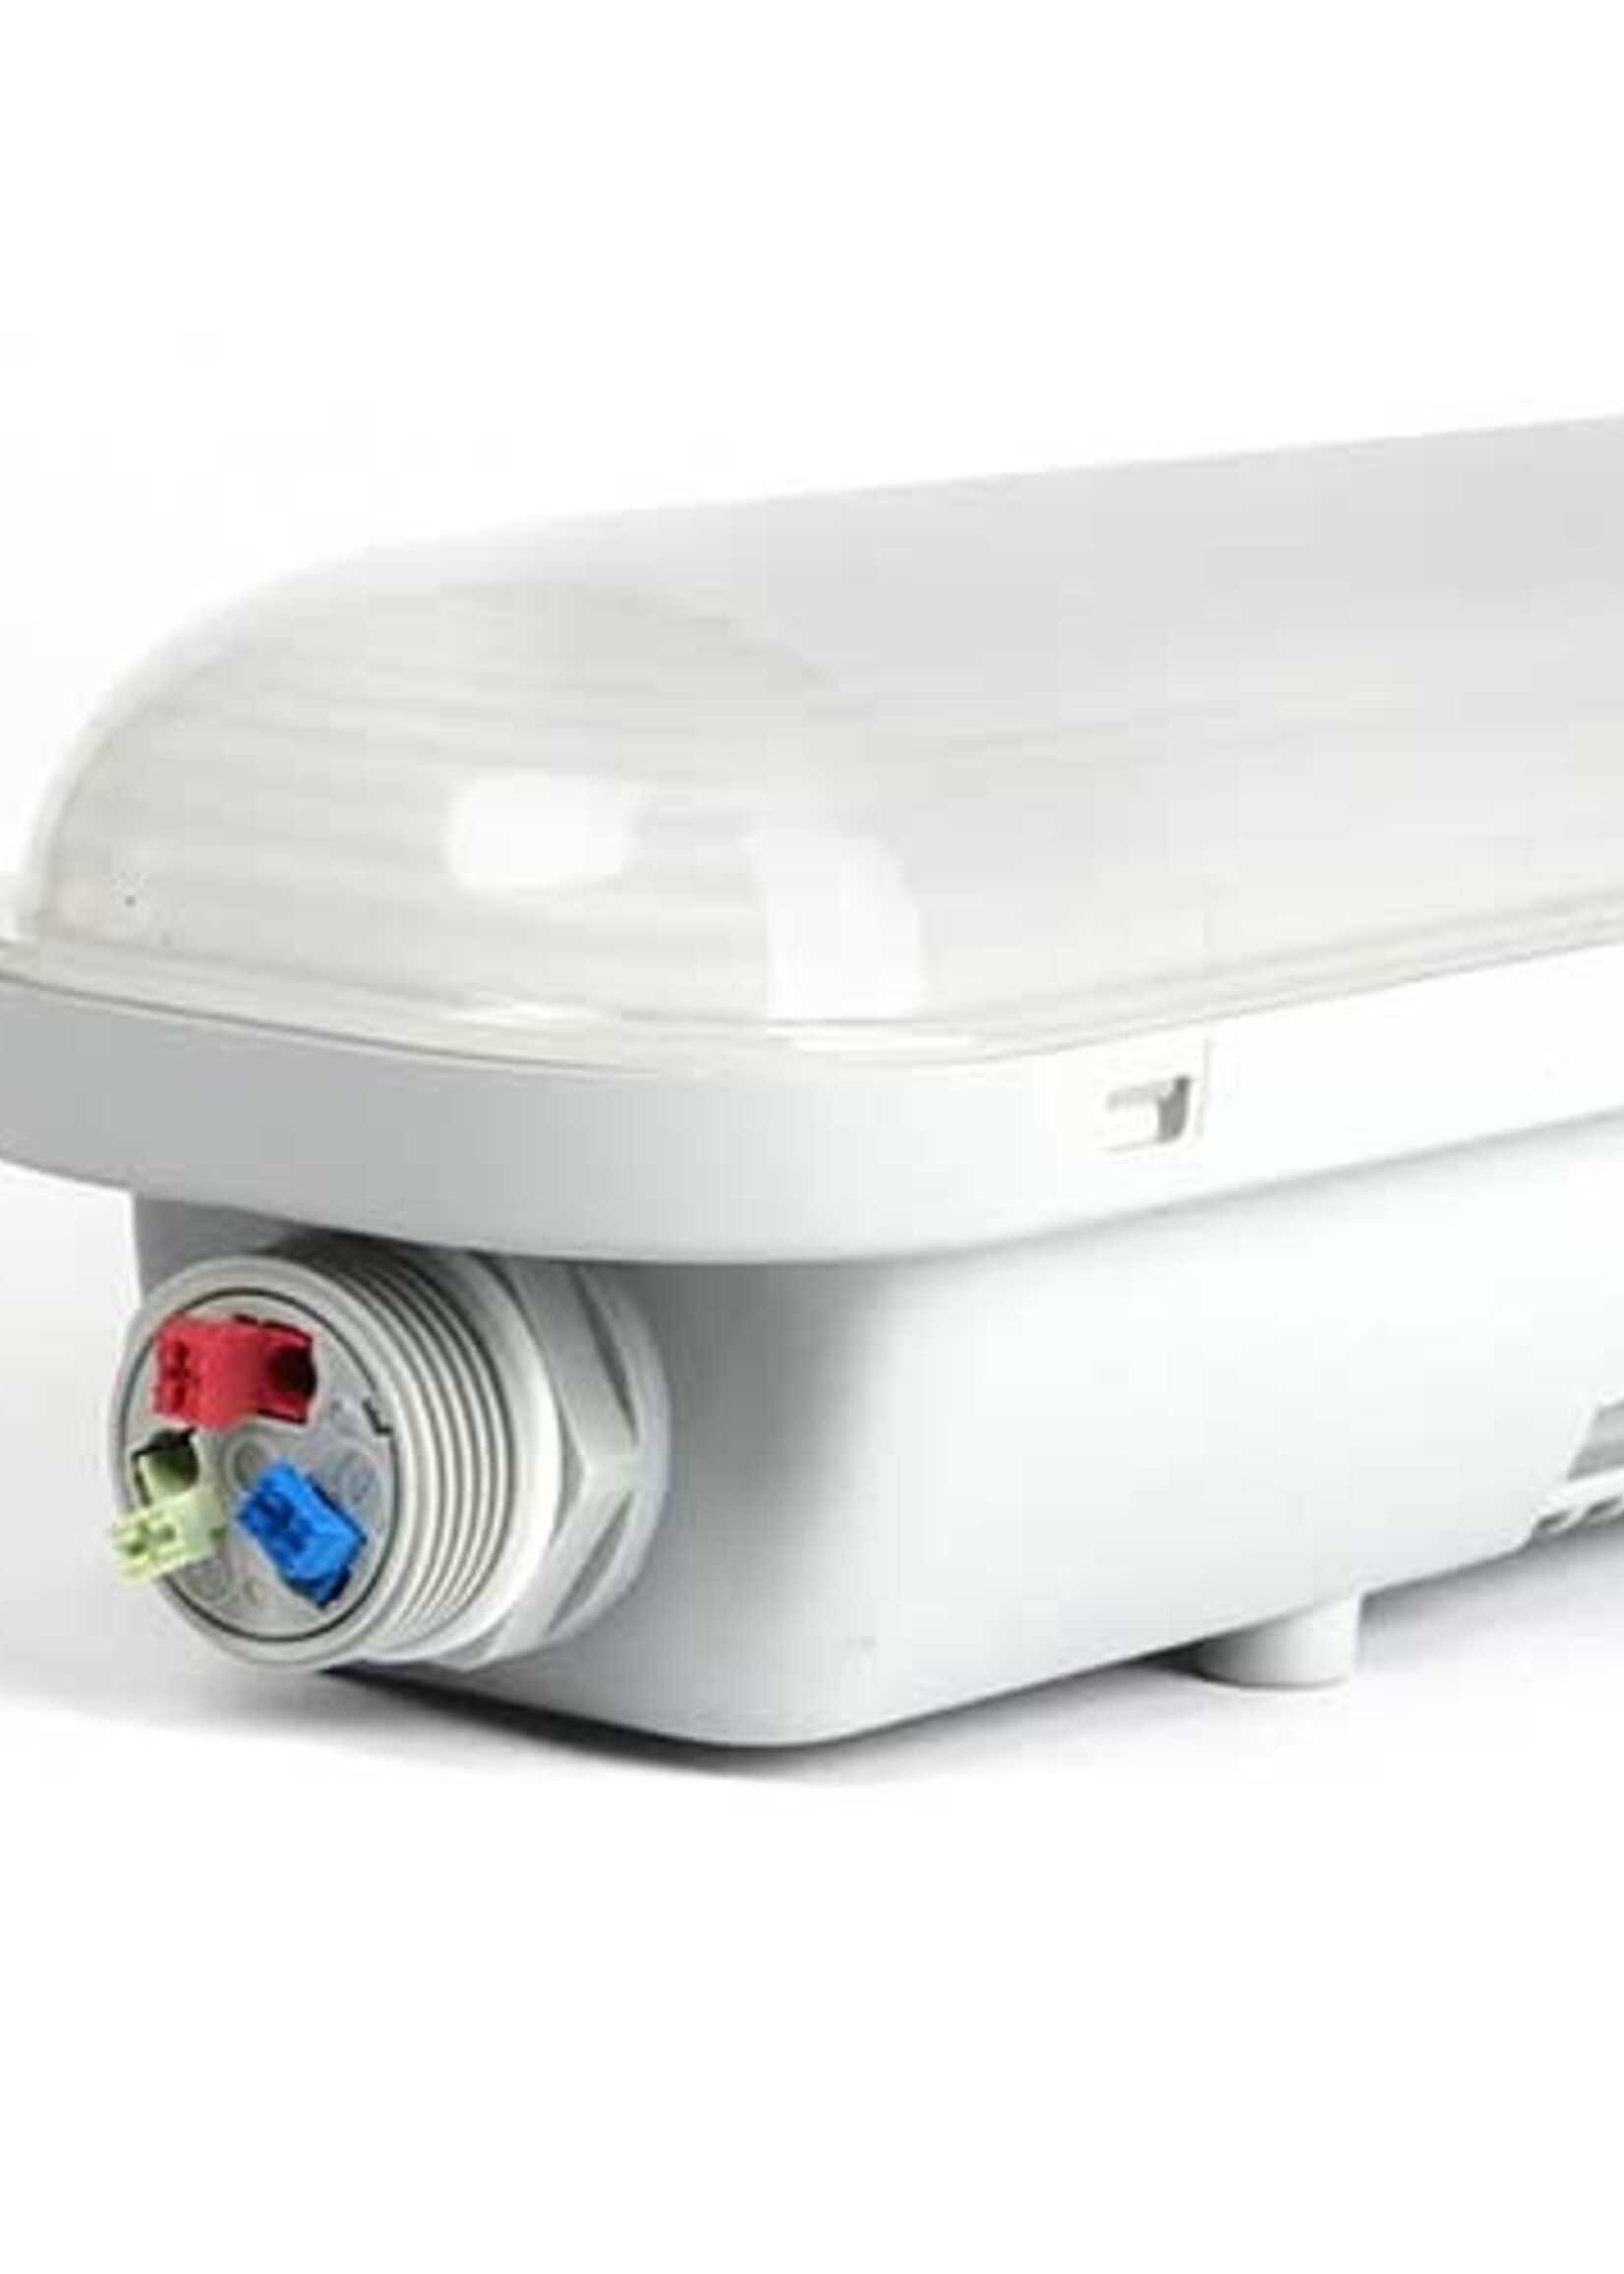 LEDWINKEL-Online LED Tri-Proof Light IP65 Water resistant 150cm 50W